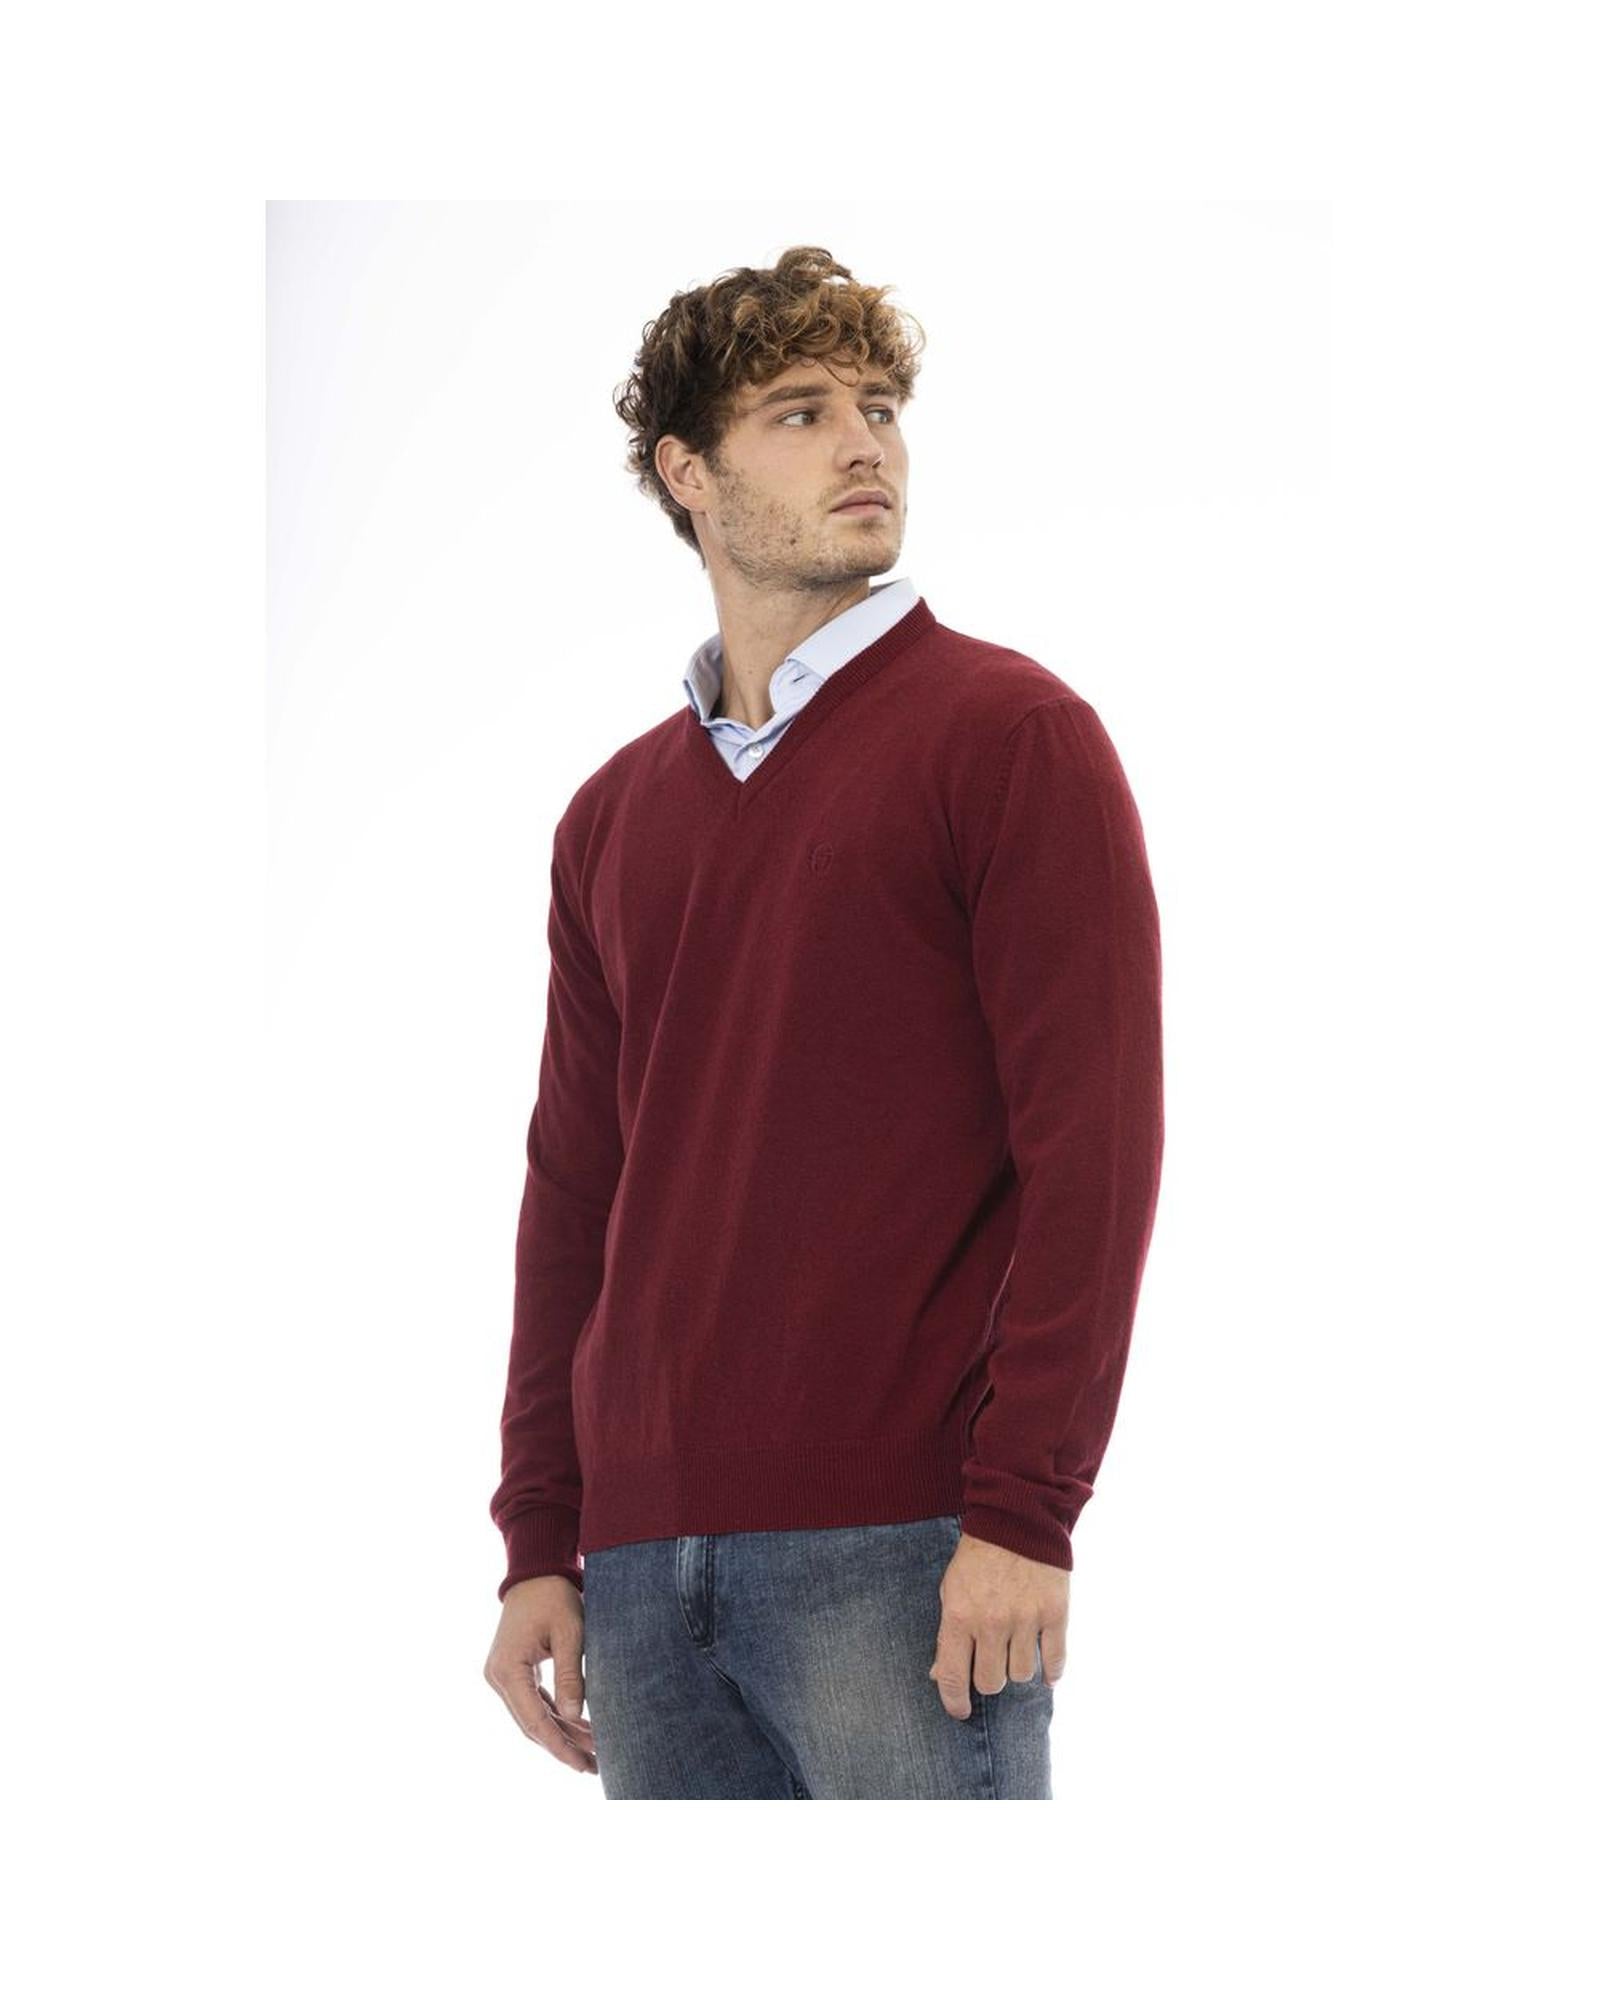 Men's Burgundy Wool Sweater - M